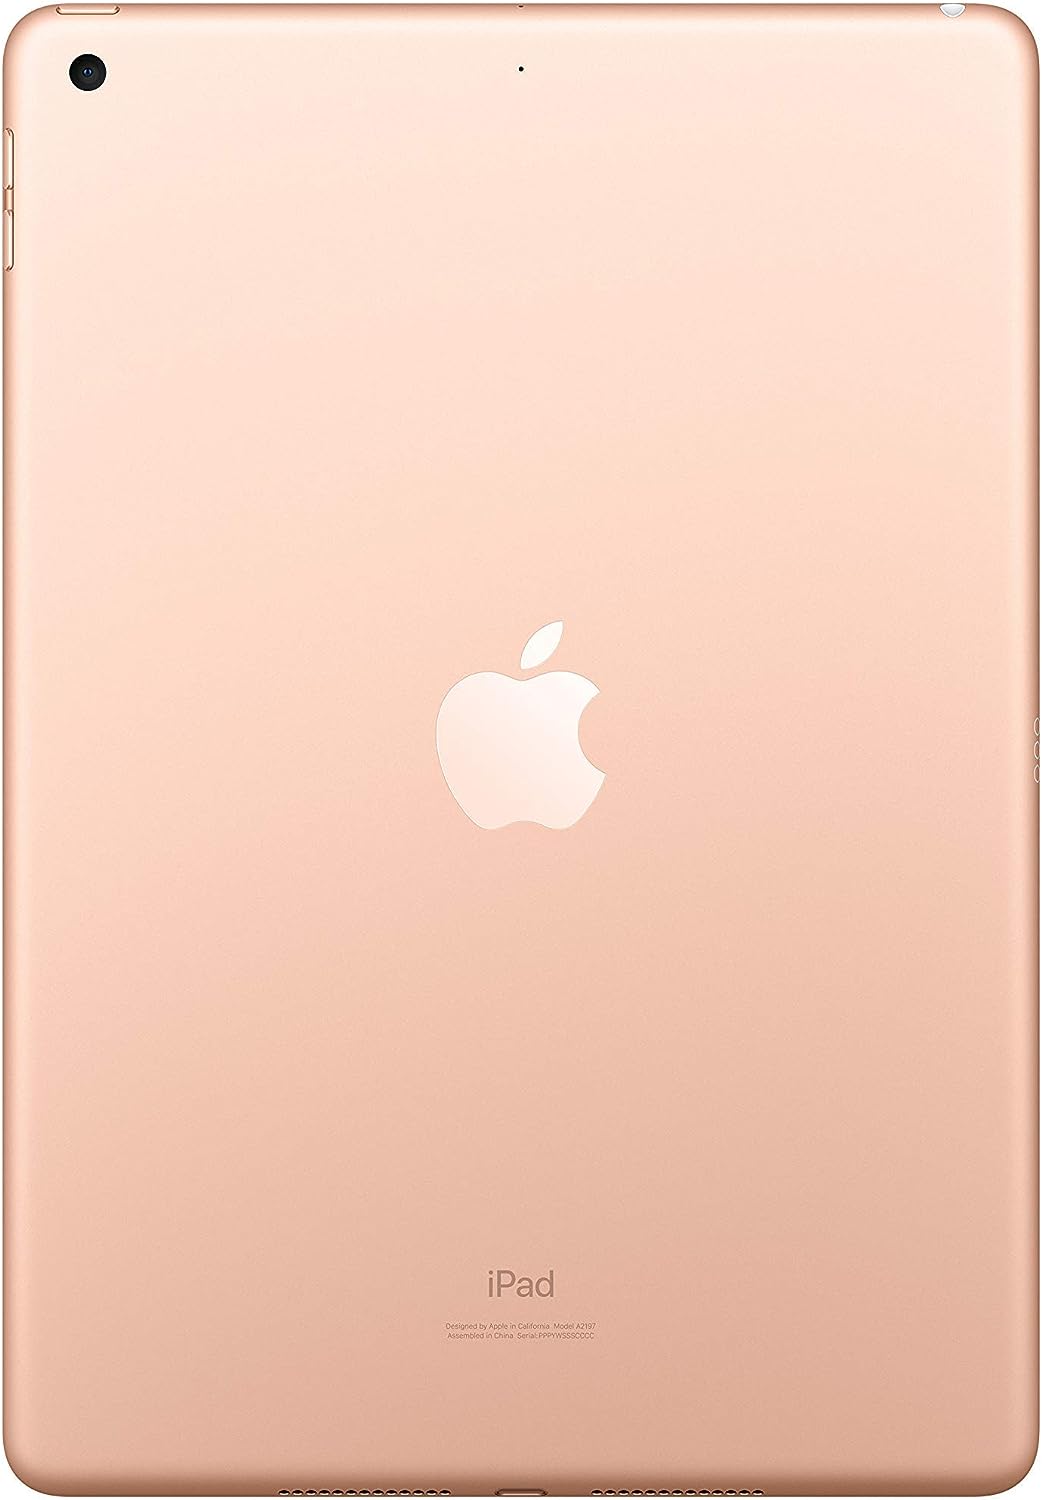 Apple iPad 8th Gen Tablet - Gold - Wi-Fi Only - 128GB Storage